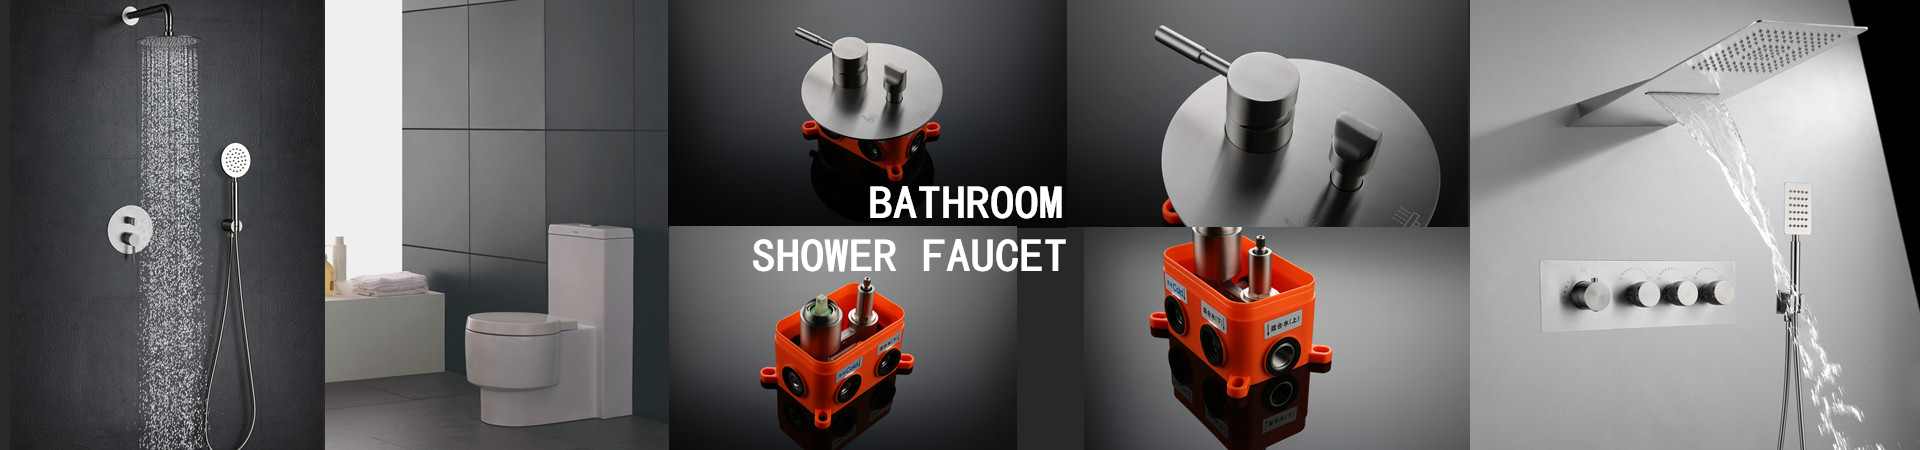 Concealed shower Set Mounted Bathroom Hand Shower mixer